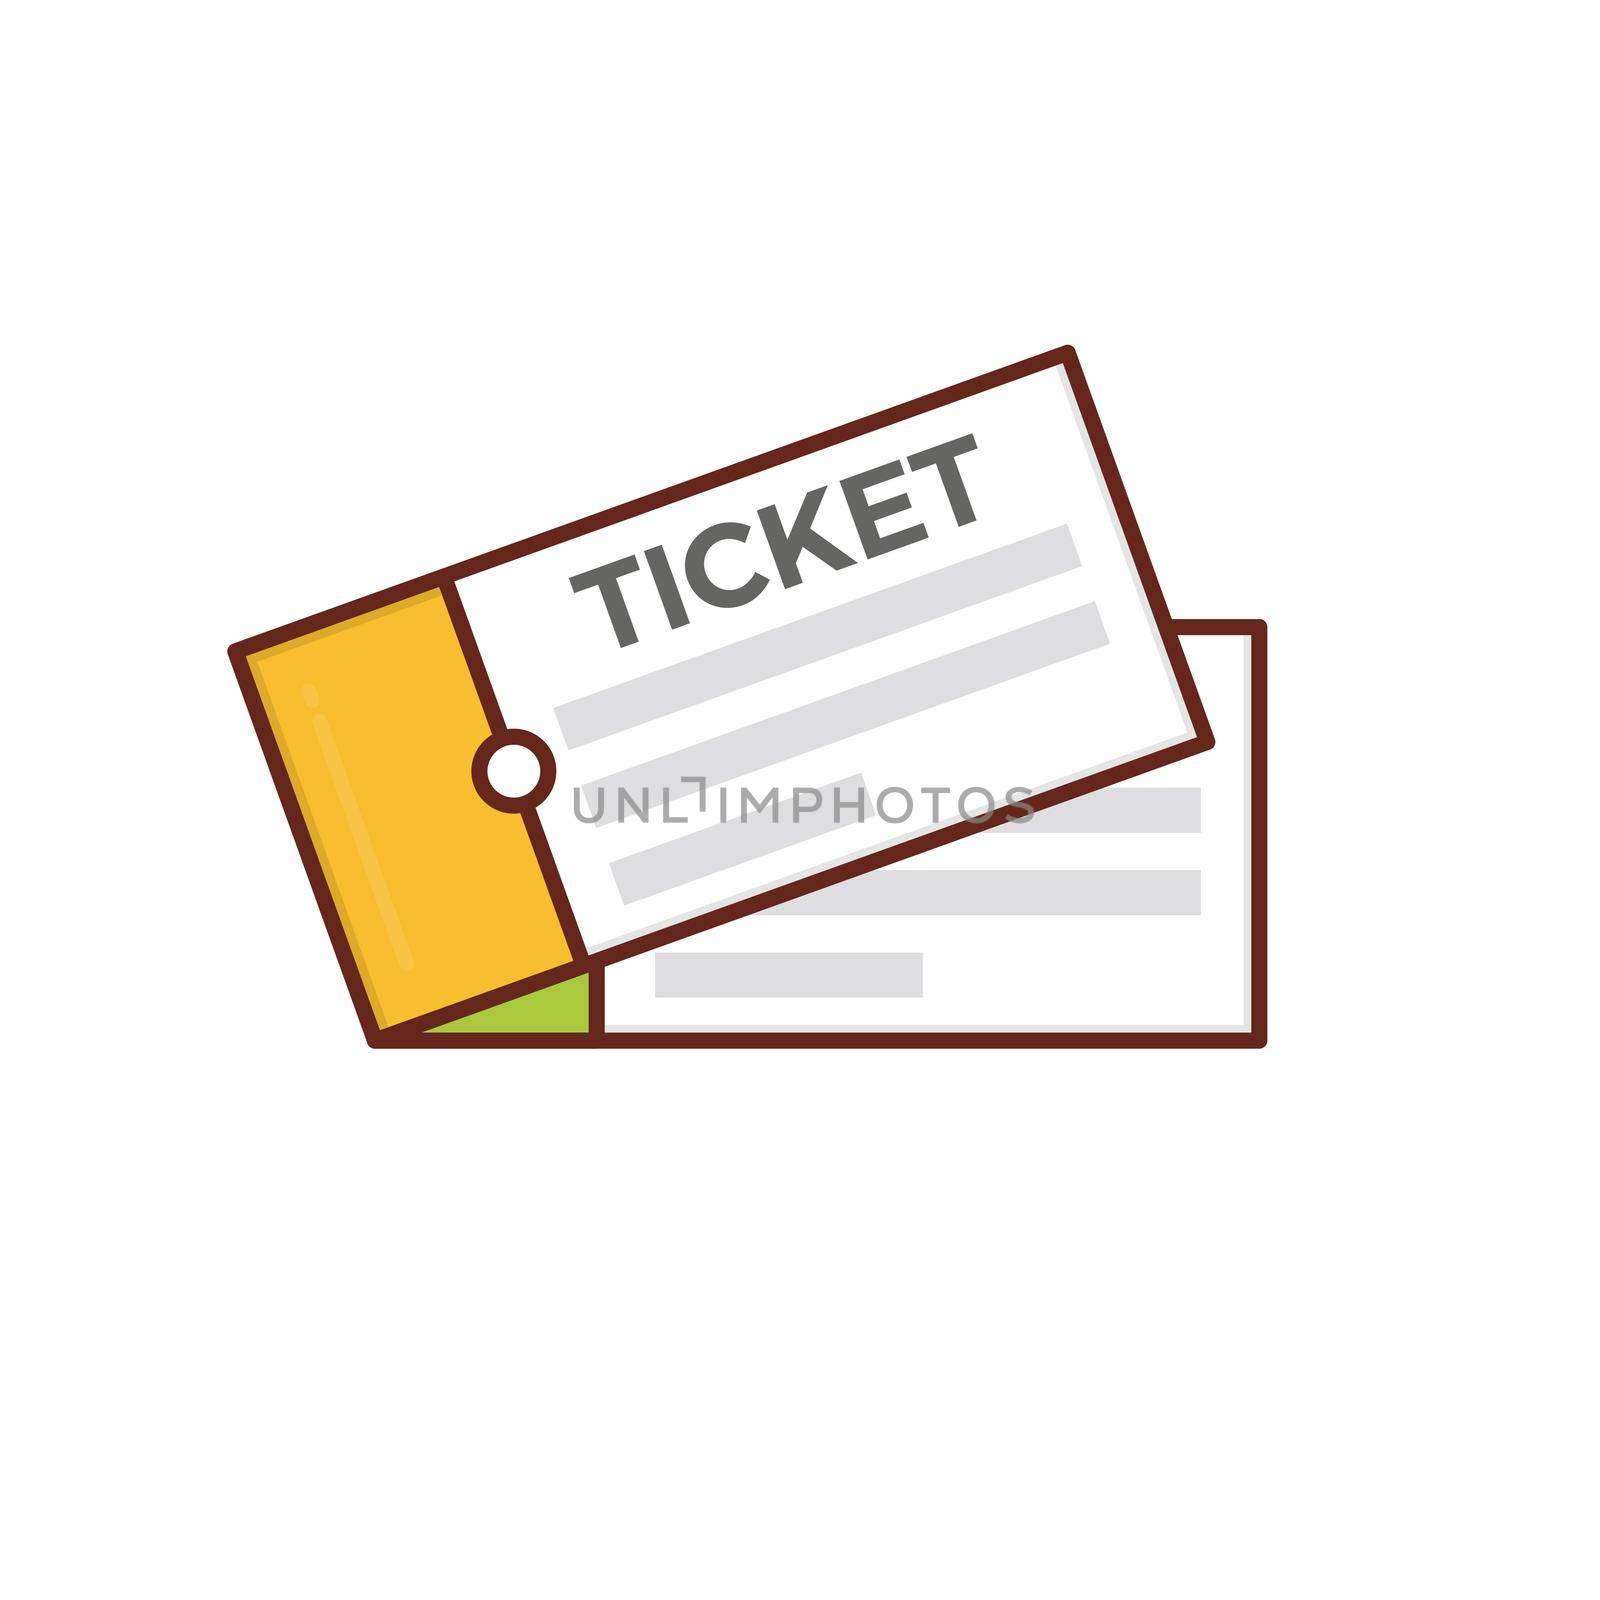 ticket by FlaticonsDesign